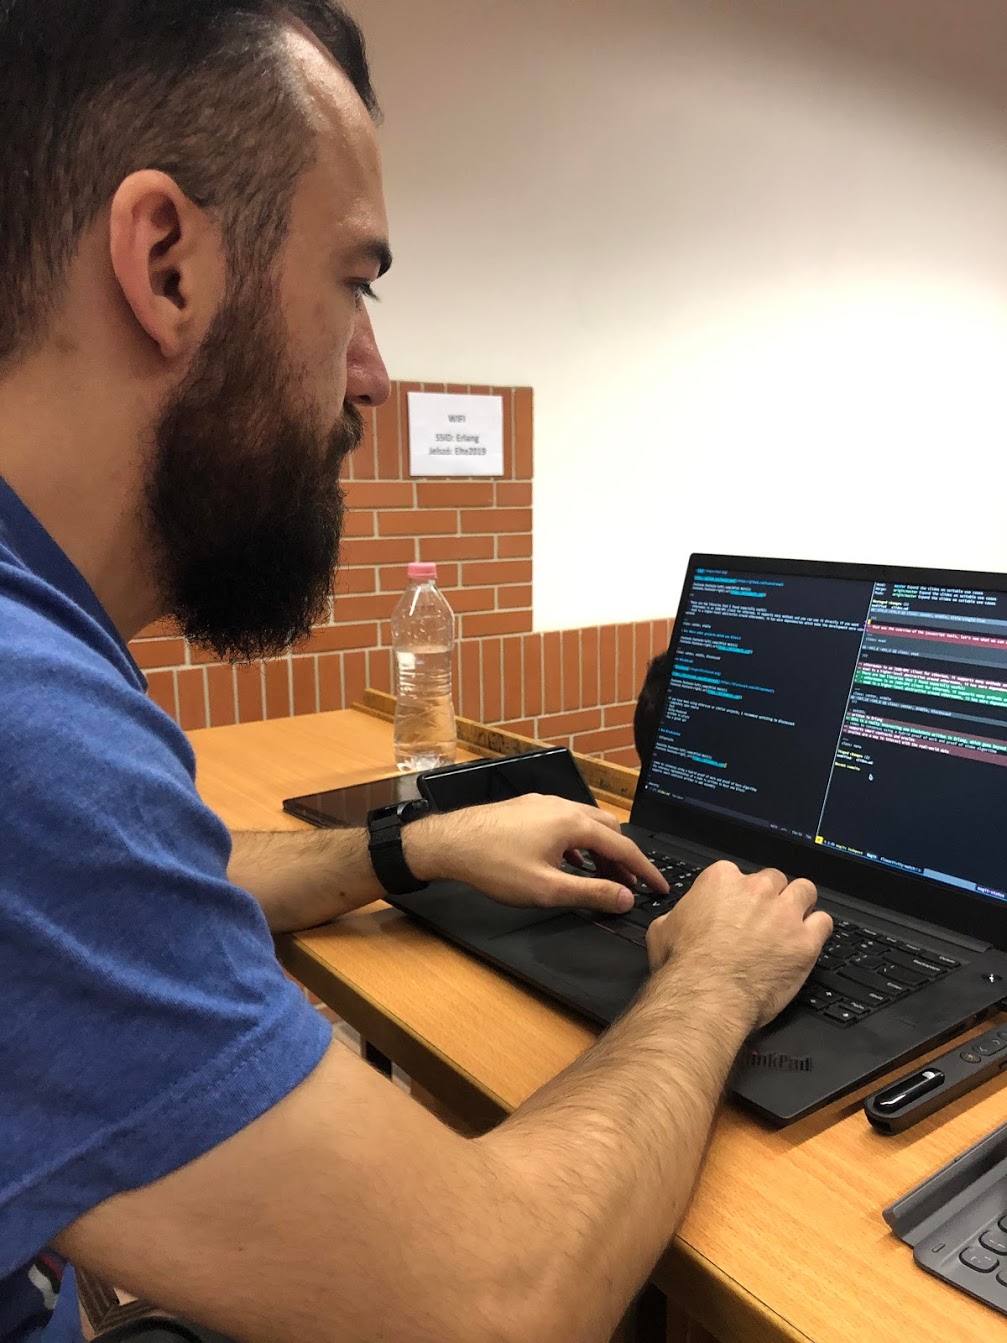 Miloš Mošić preparing code for the Blockchain presentation